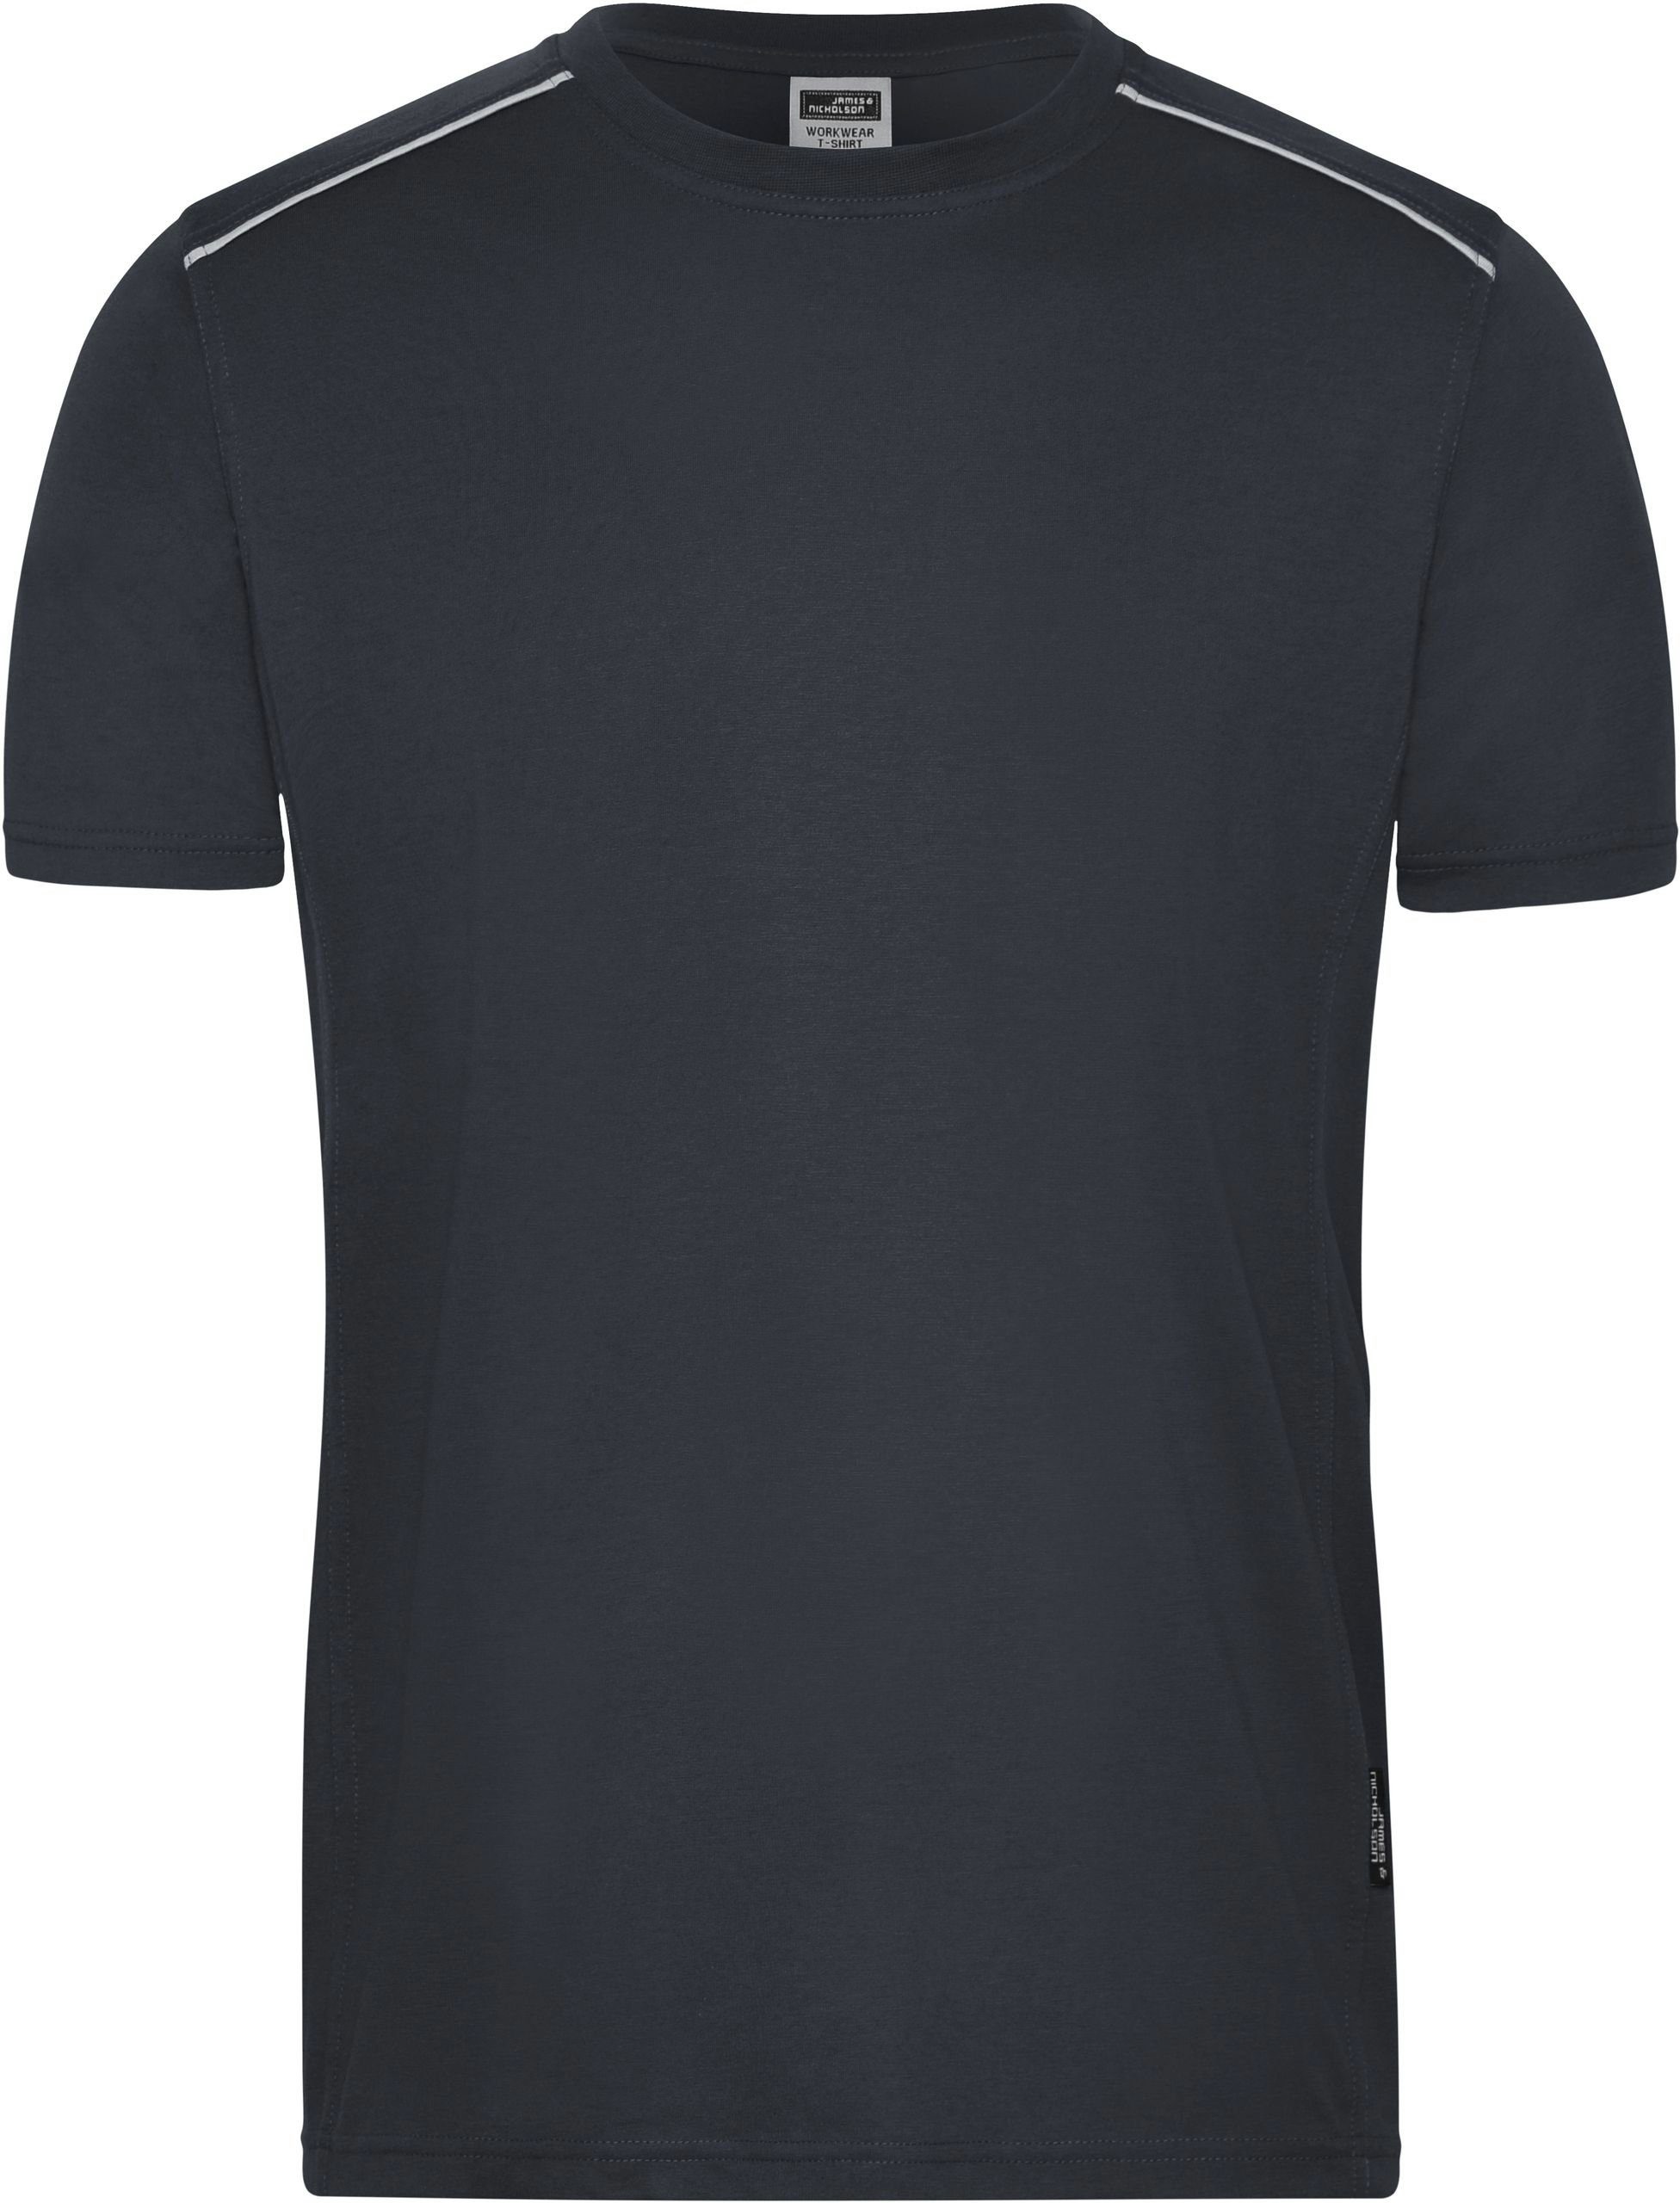 Nicholson -Solid- James T-Shirt T-Shirt Carbon Workwear Arbeits & Baumwolle Bio FaS50890